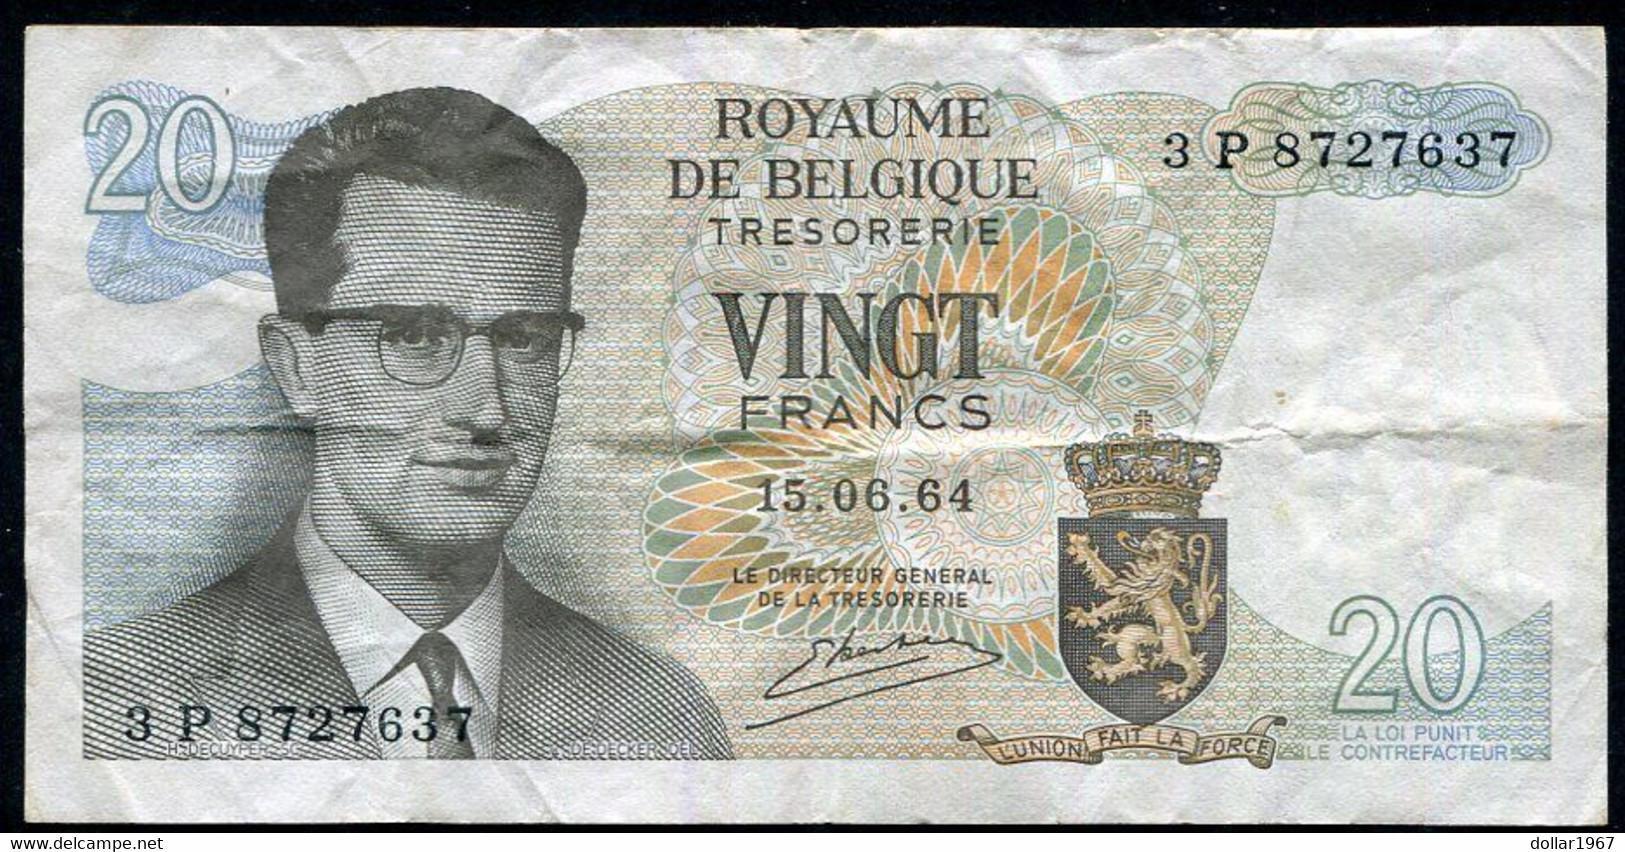 België Belgique Belgium 15 06 1964 -  20 Francs Atomium Baudouin.  3 P 8727637 - 20 Francos